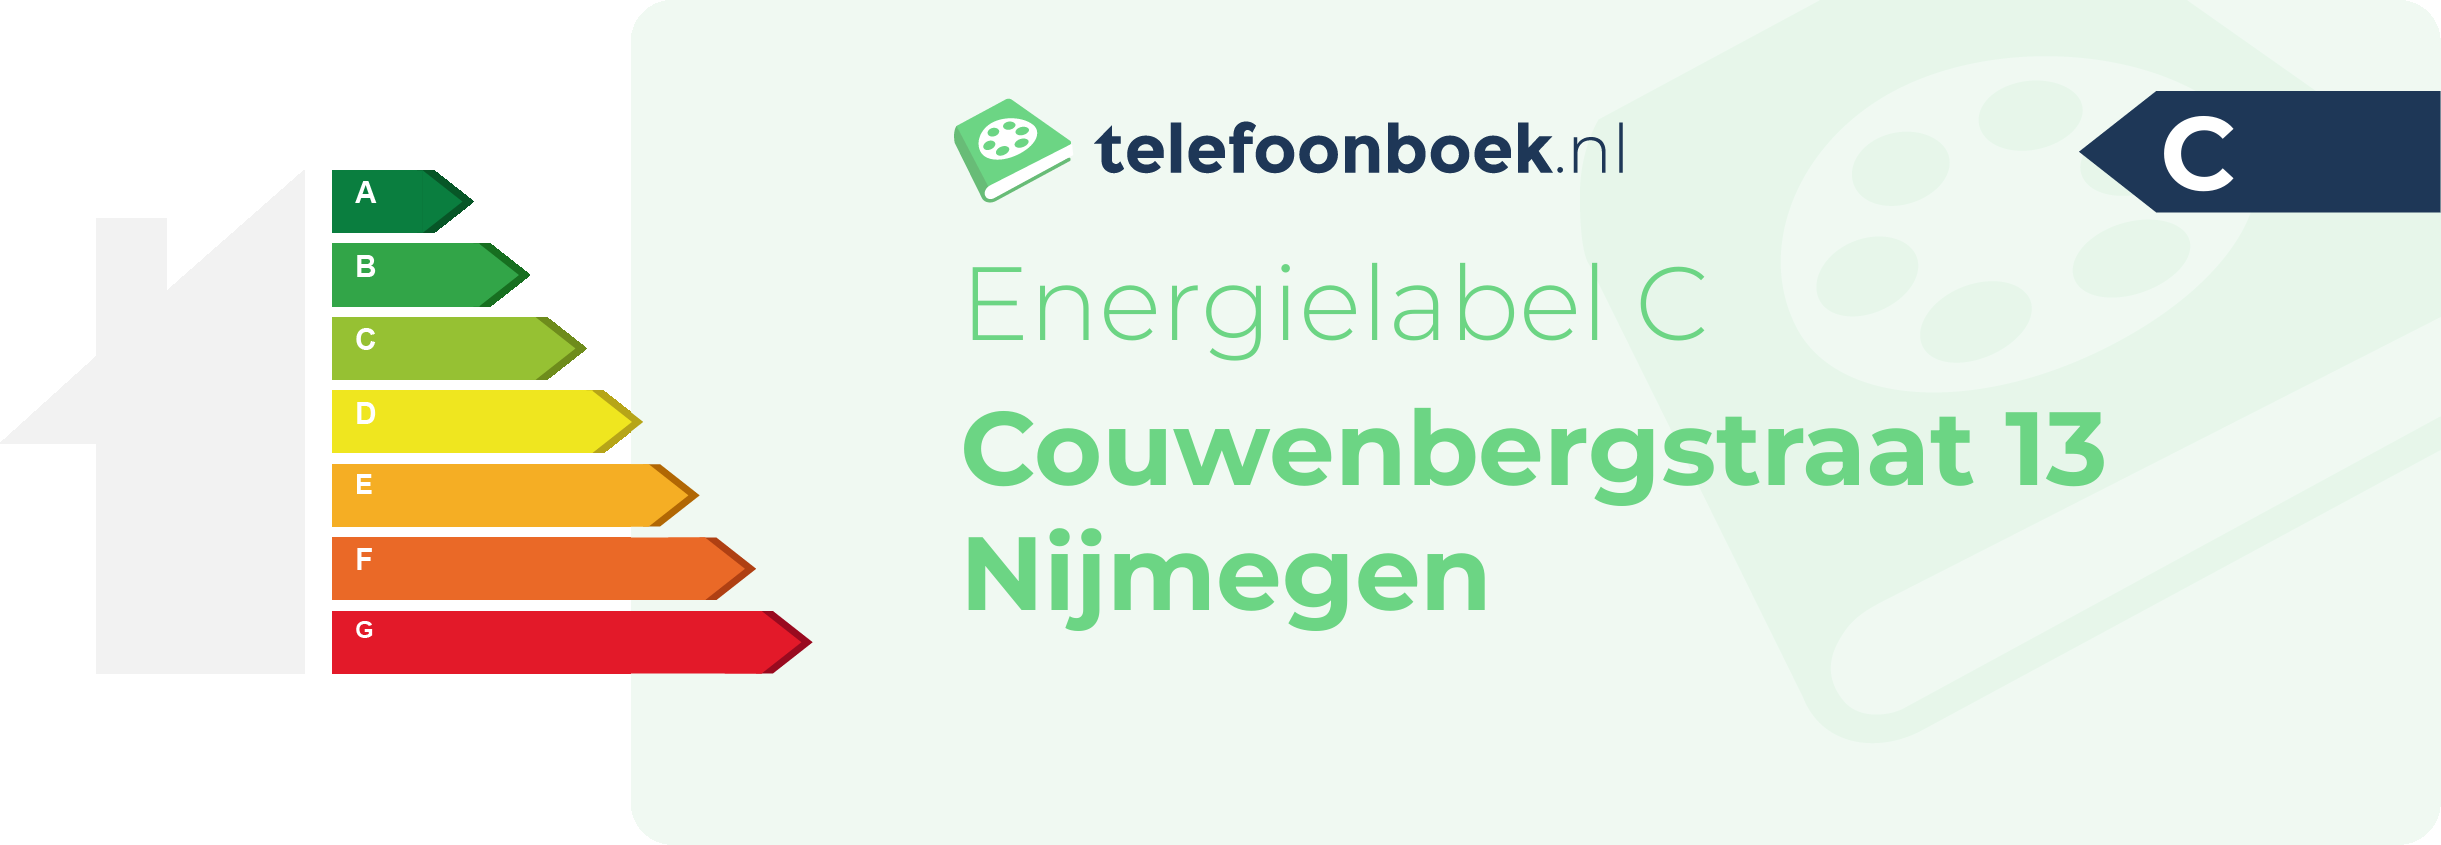 Energielabel Couwenbergstraat 13 Nijmegen